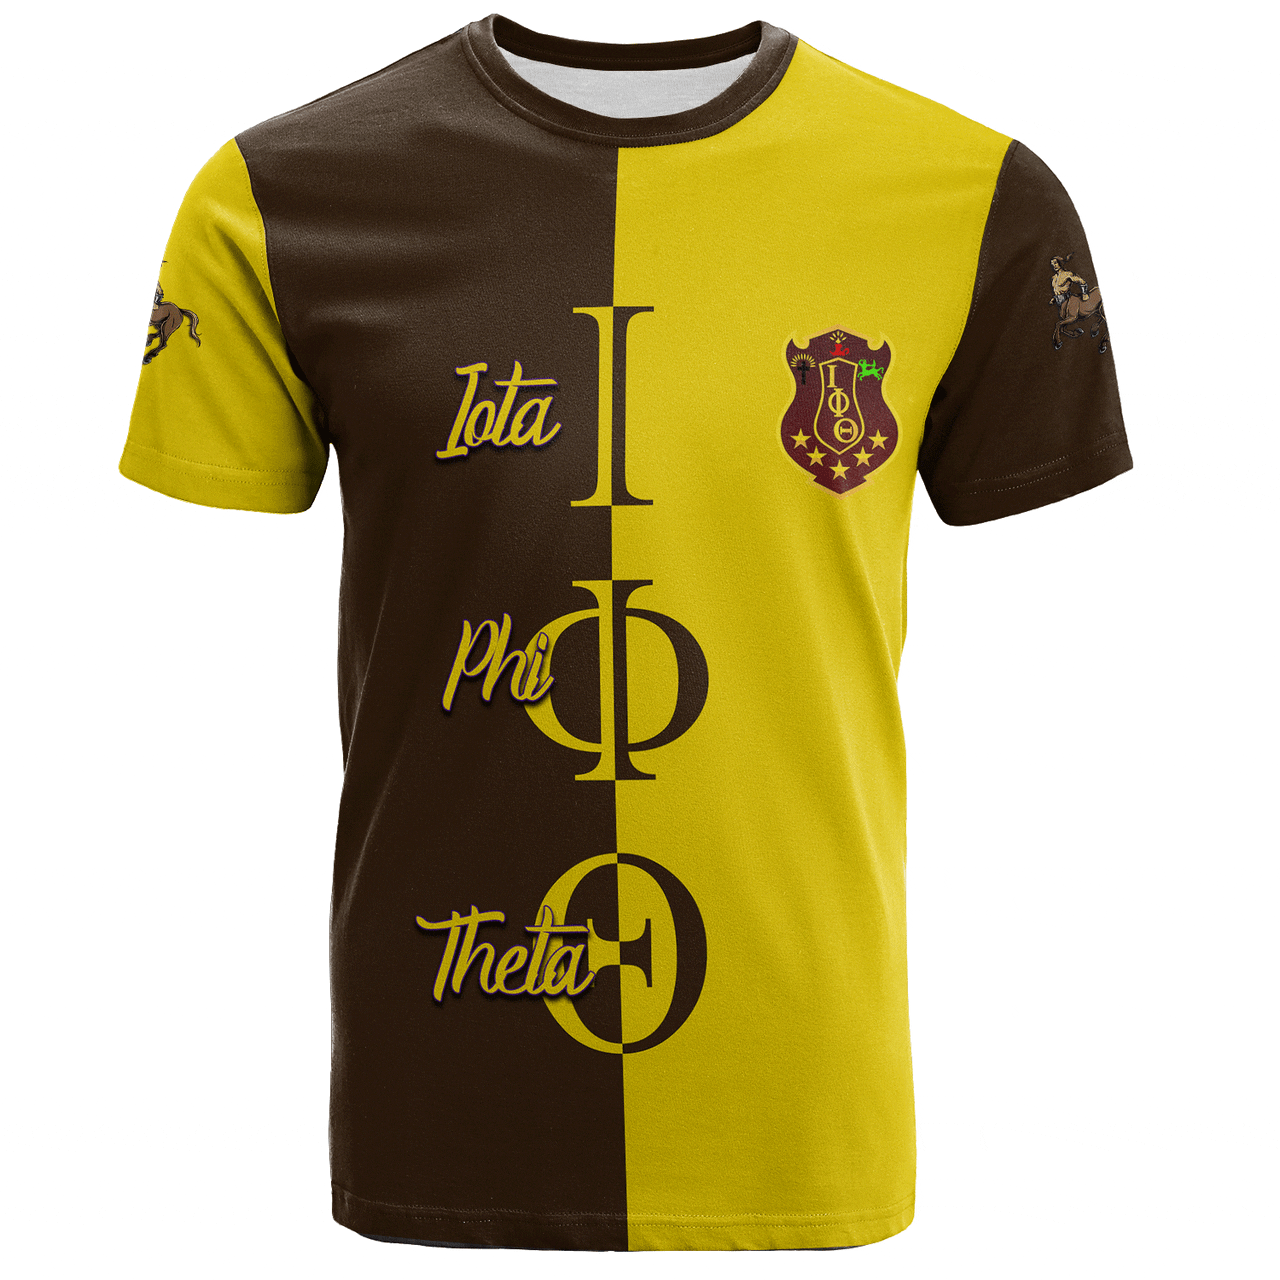 Iota Phi Theta T-Shirt Half Style